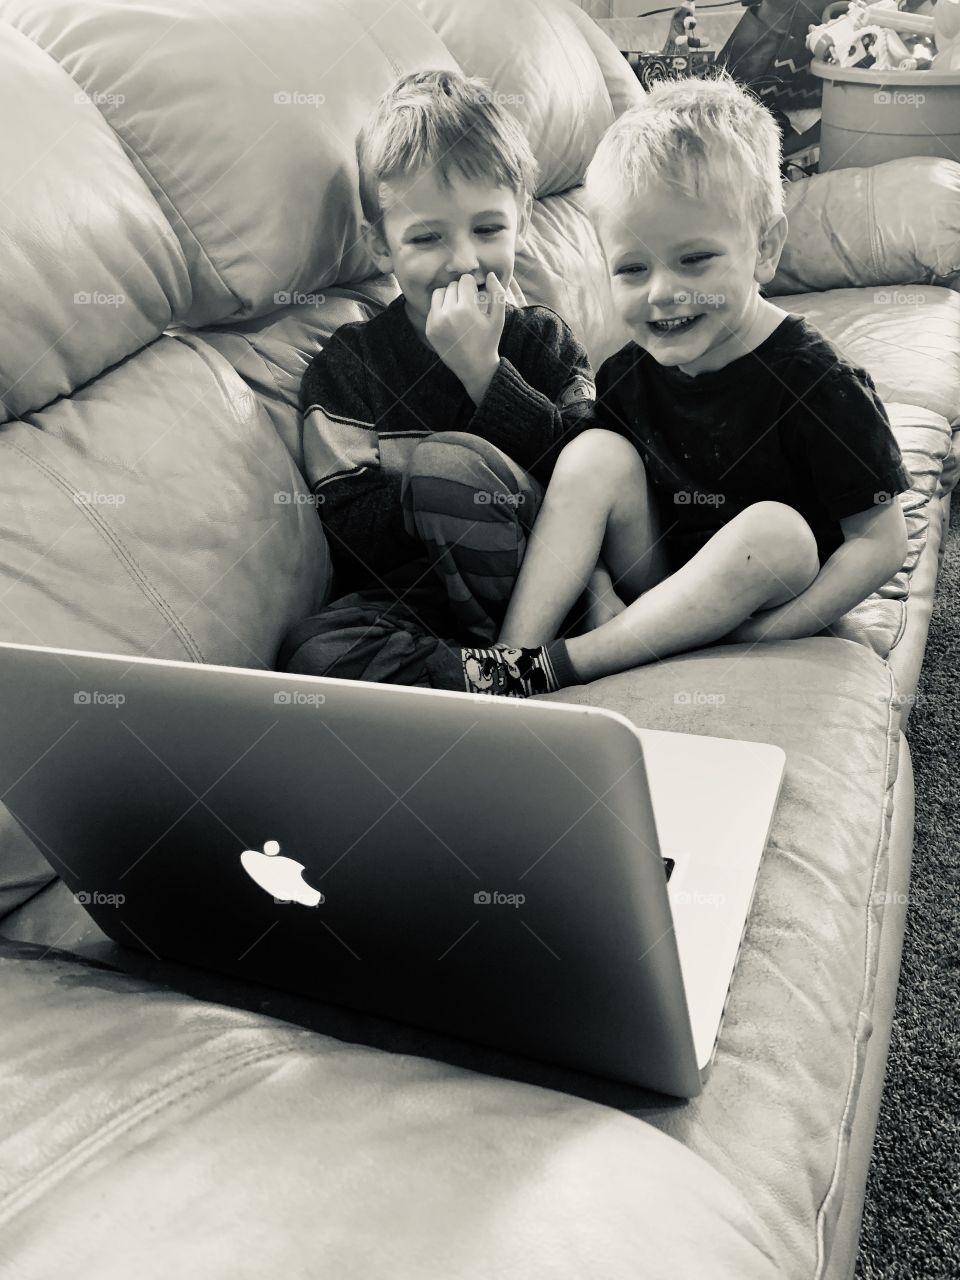 Boys enjoying YouTube